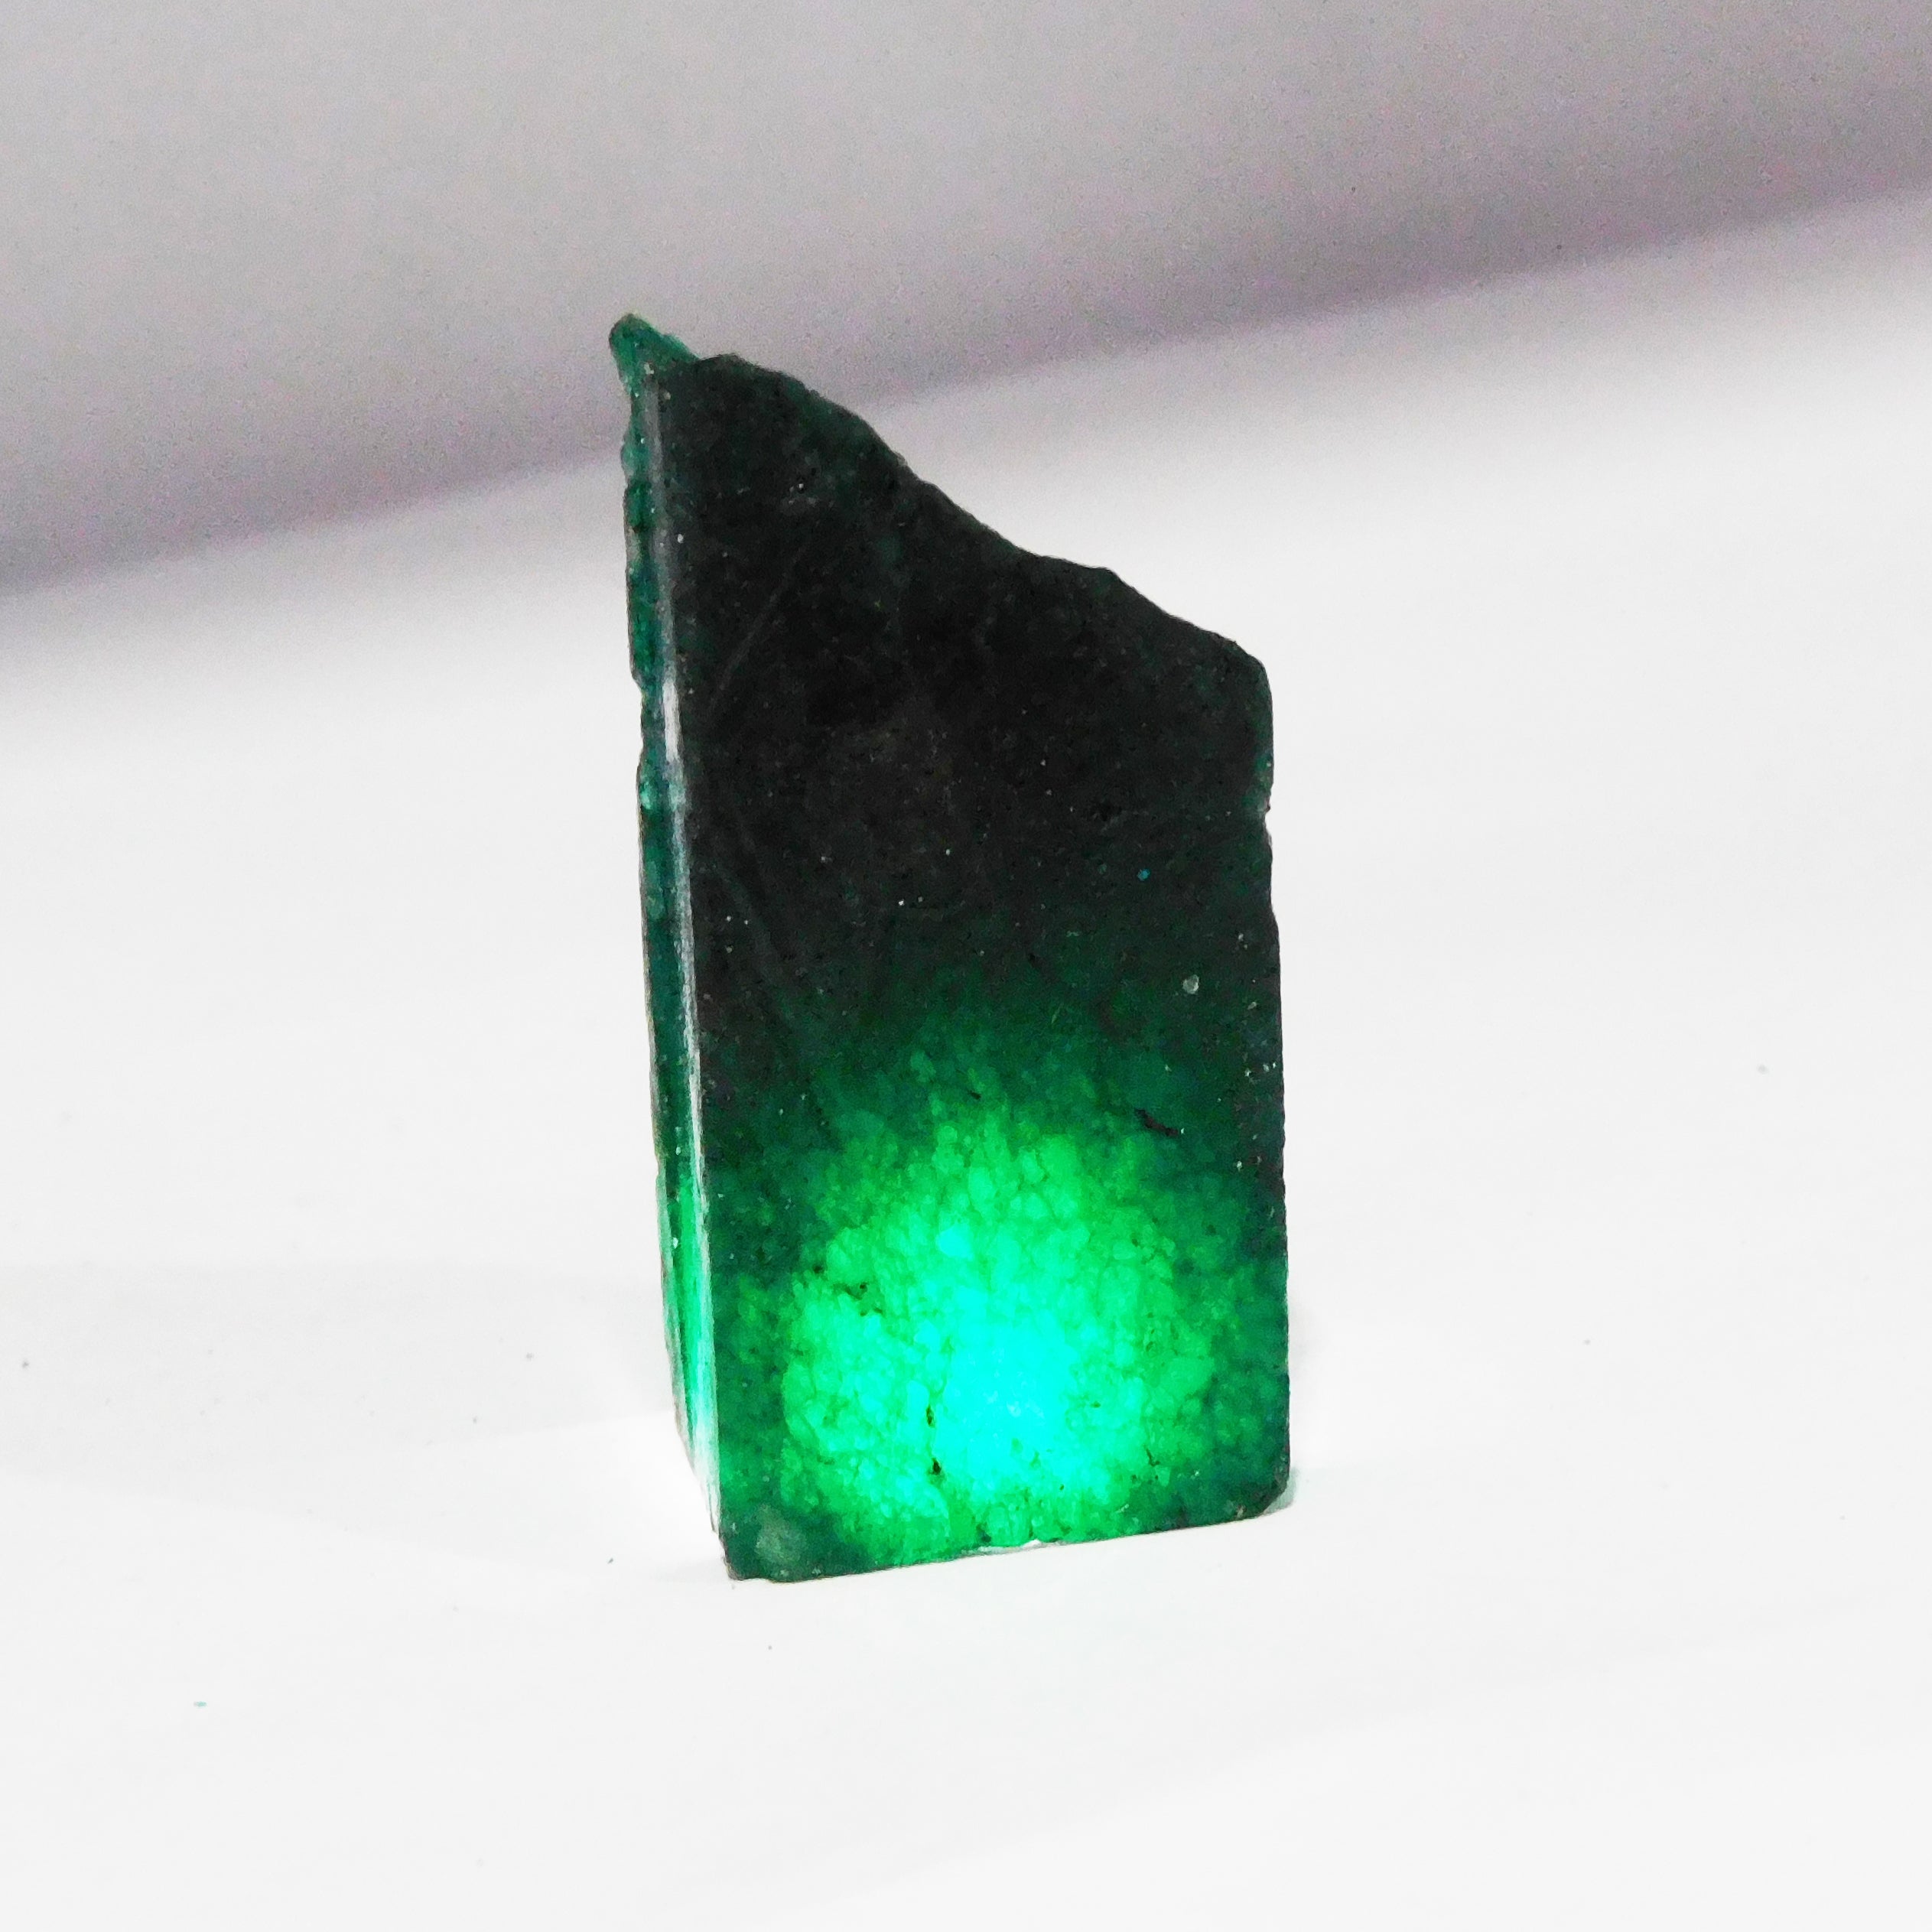 Jwelery Making Gemstone !! Uncut Raw Rough 96.15 Carat Natural Emerald Green Rough CERTIFIED Loose Gemstone | ON SALE